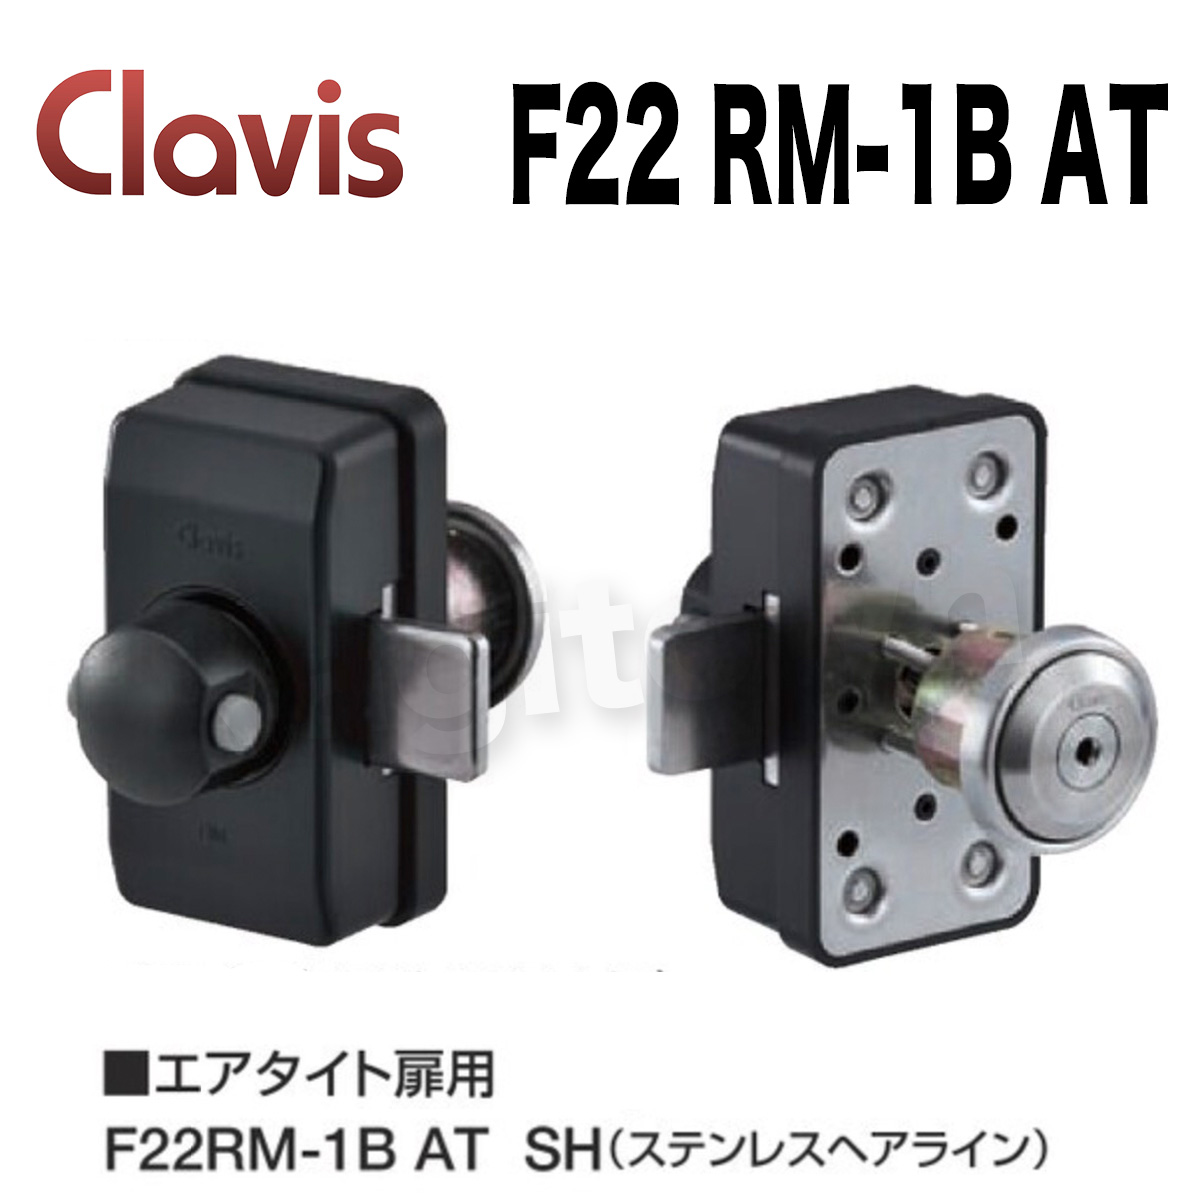 Clavis F22 RM-1B AT【クラビス】面付補助錠 エアタイト扉用 納期3~5週間 メーカー手配品